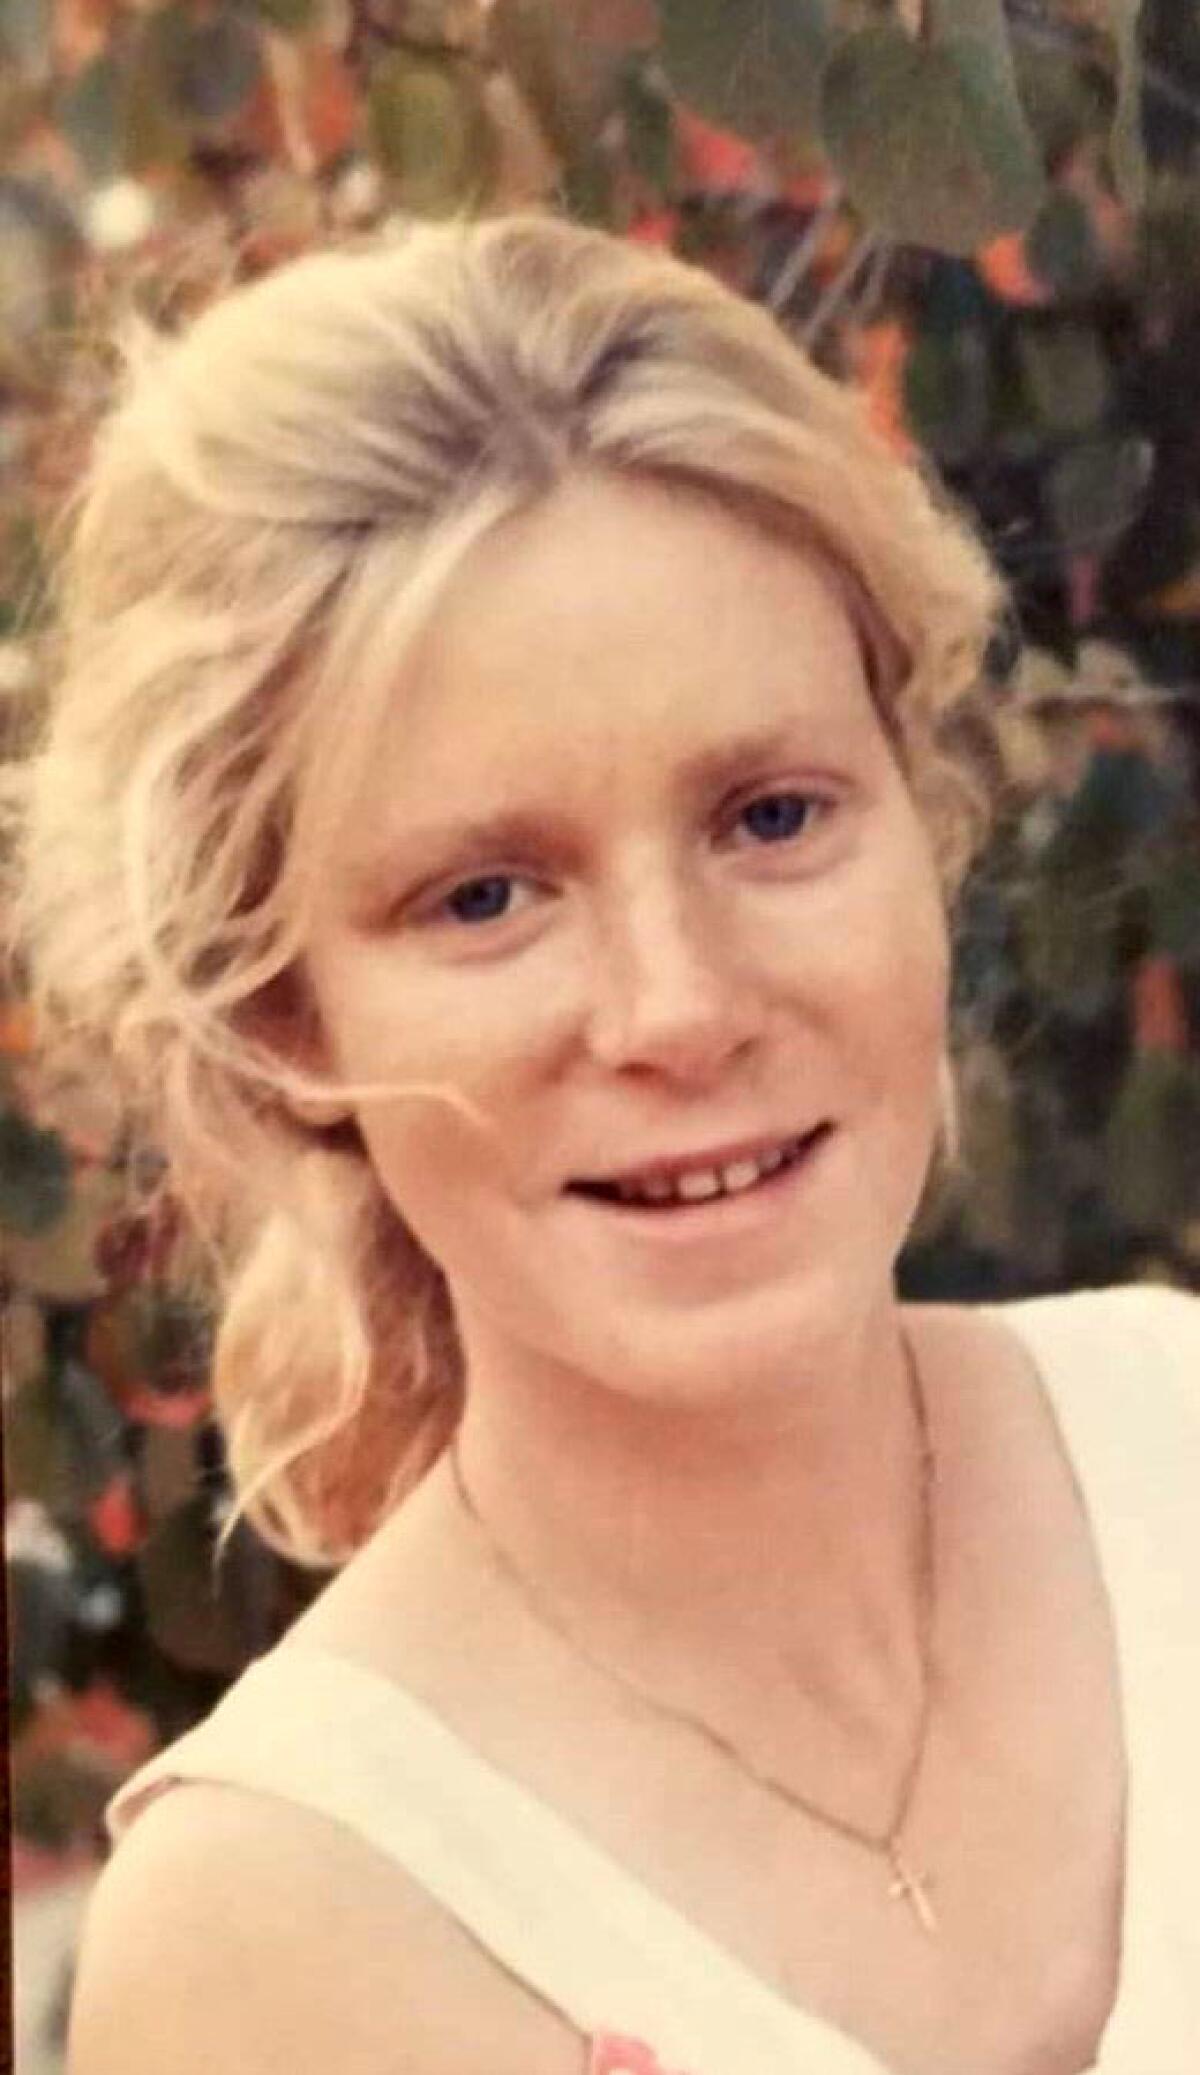 After three decades, the woman was identified through DNA evidence as Amanda Lynn Schumann Deza.